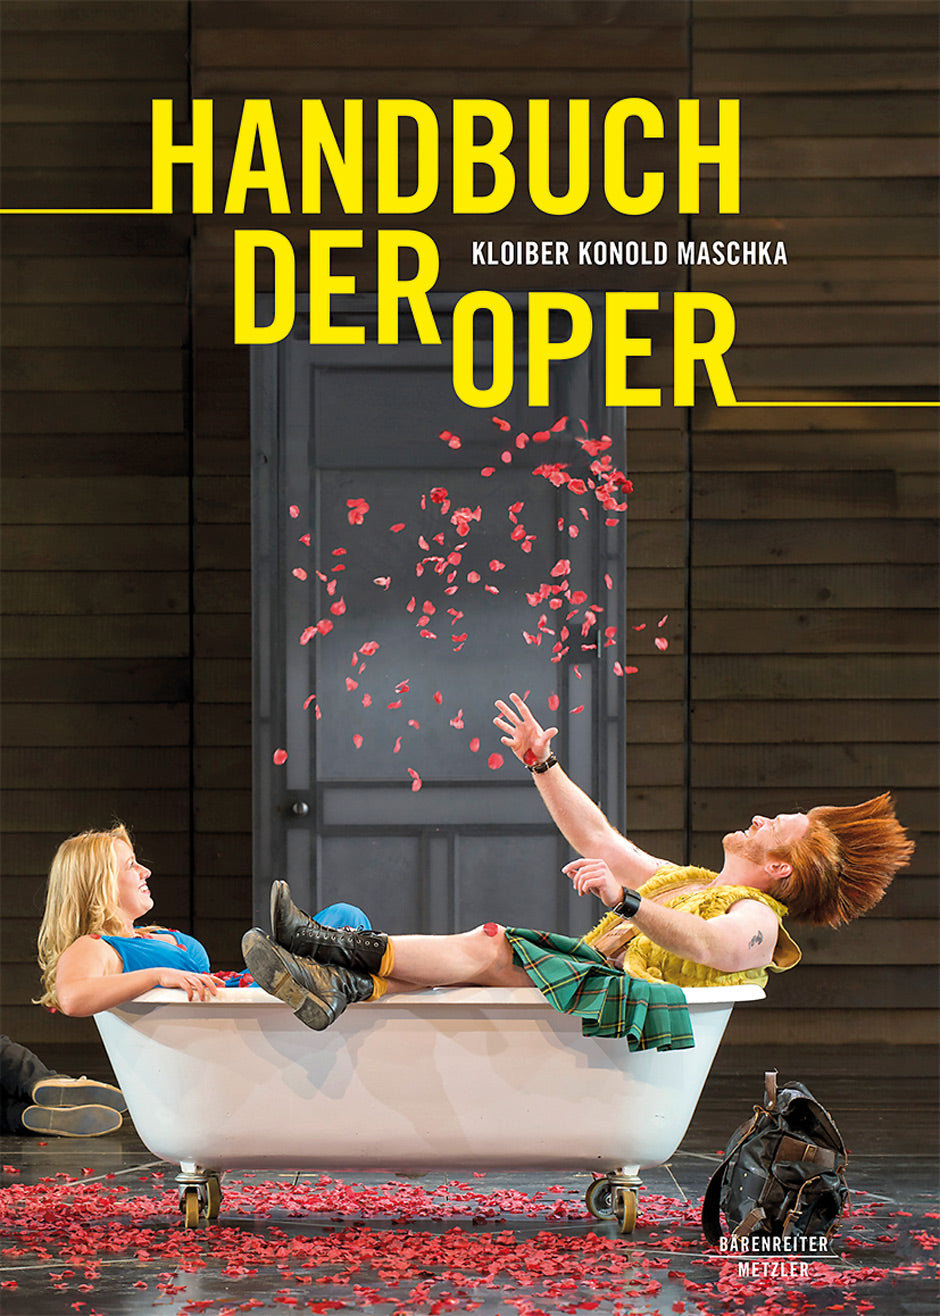 Handbuch der Oper (New Edition)